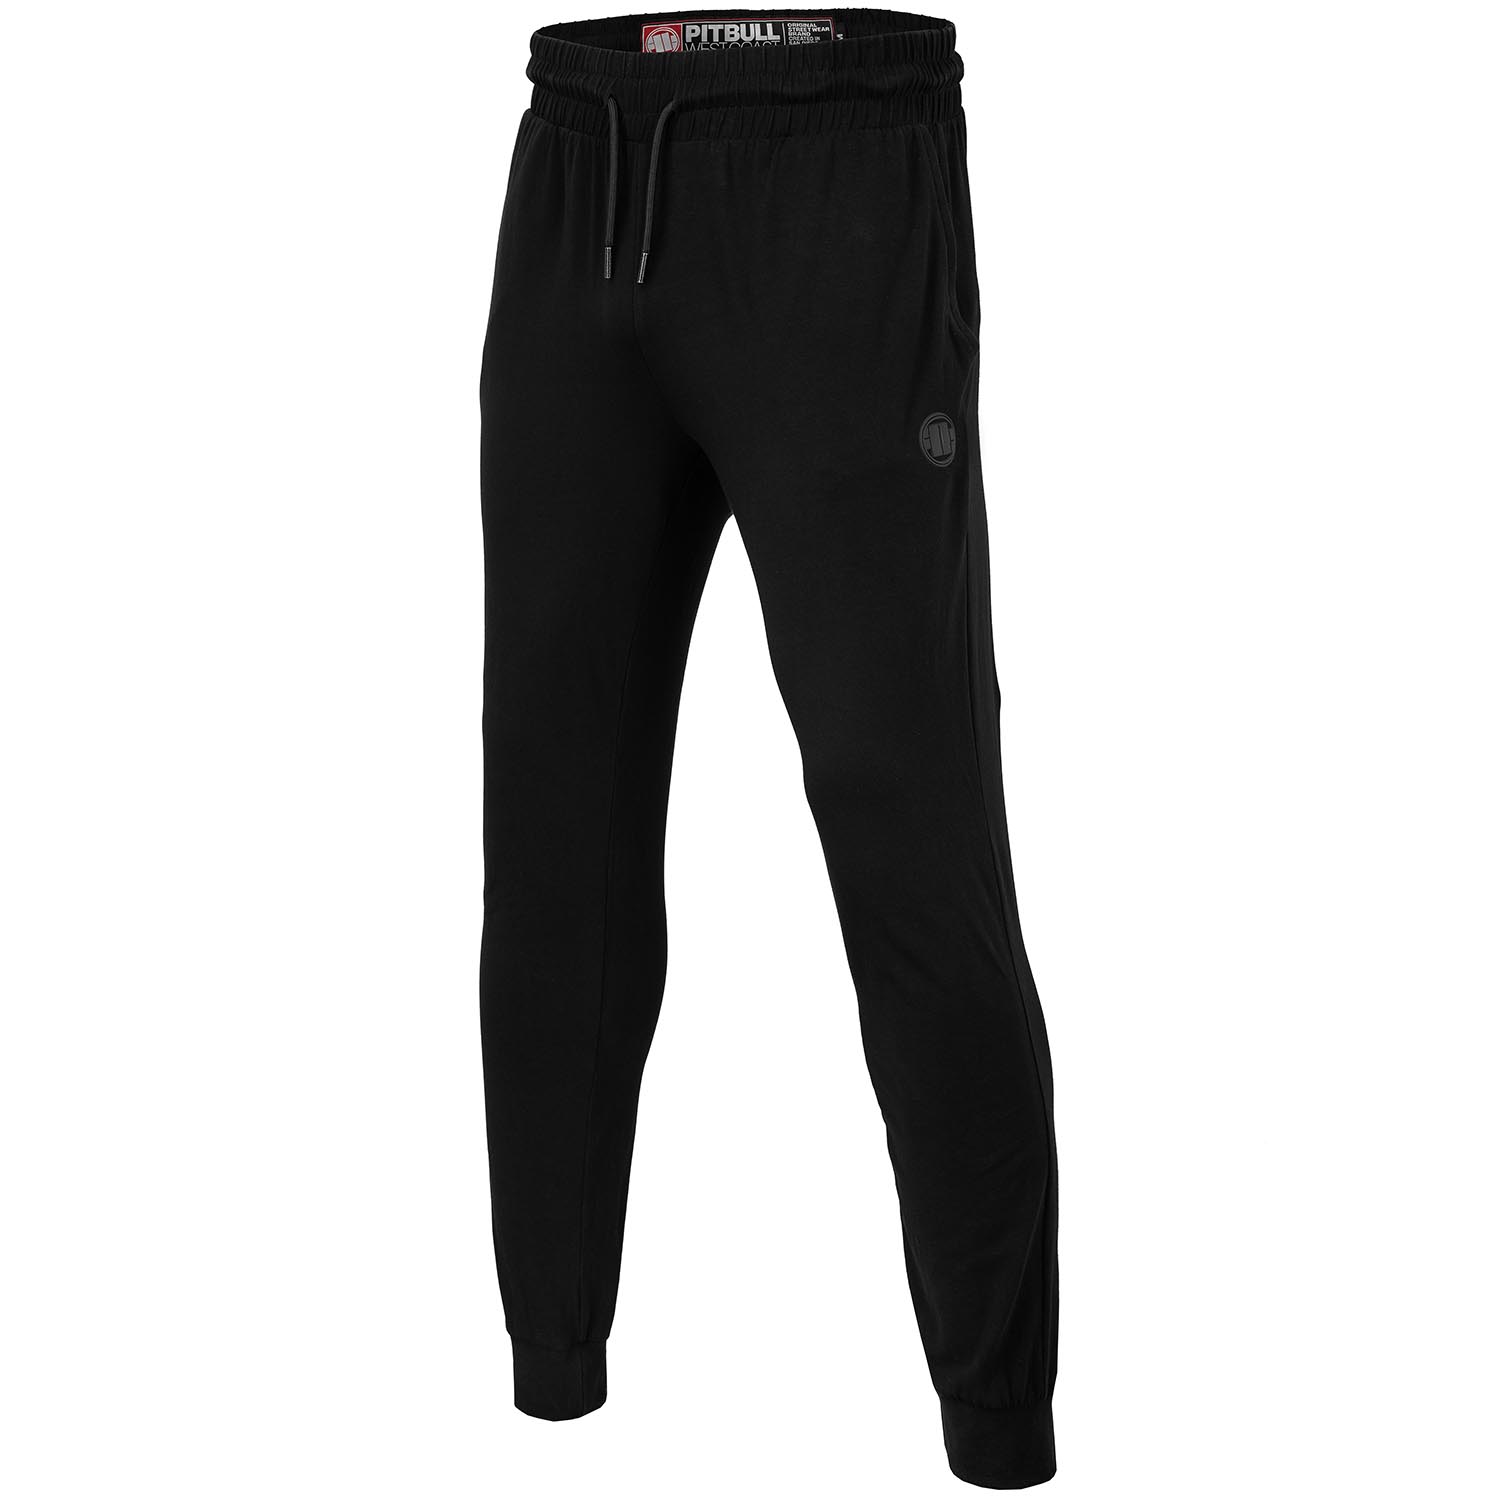 Pit Bull West Coast Jogging Pants, Durango, black, M